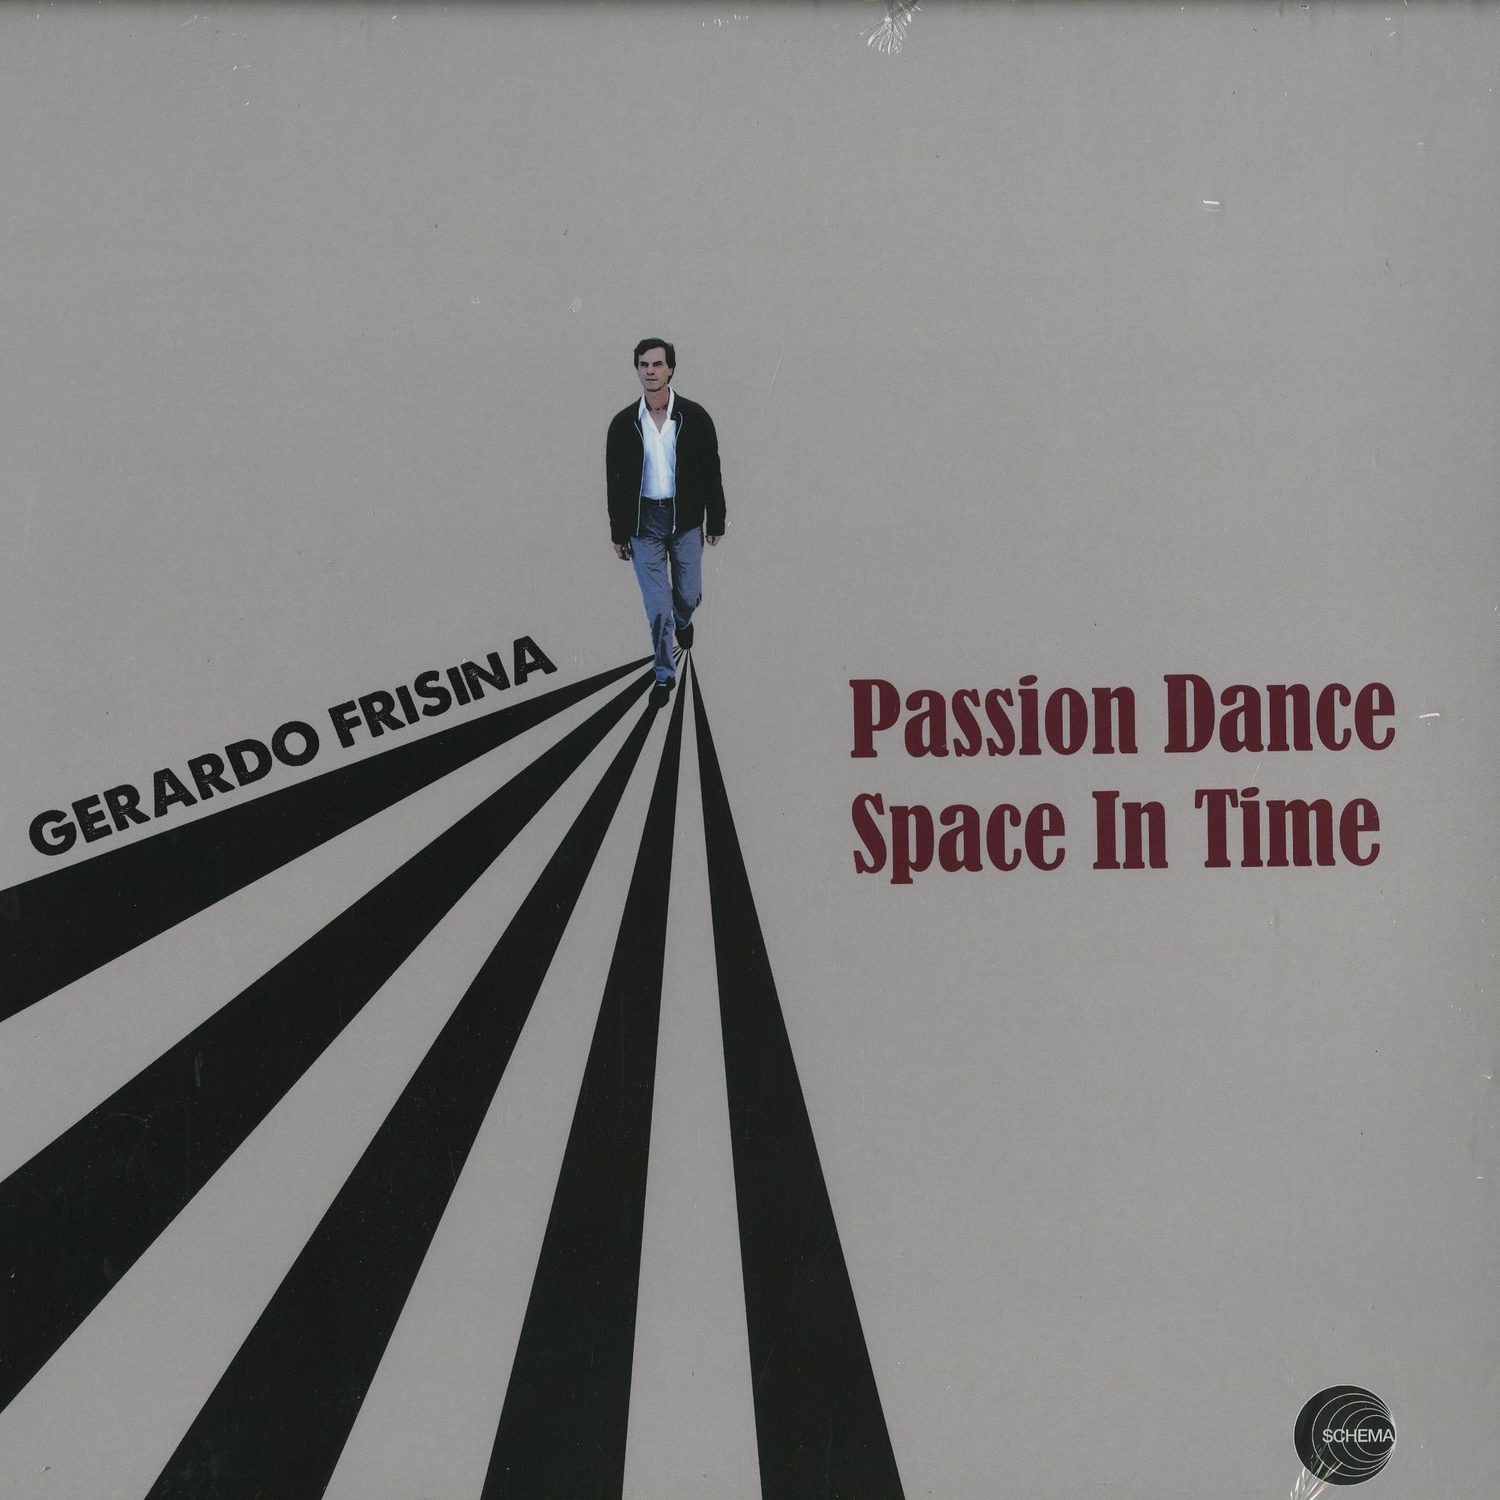 Gerardo Frisina - PASSION DANCE / SPACE IN TIME